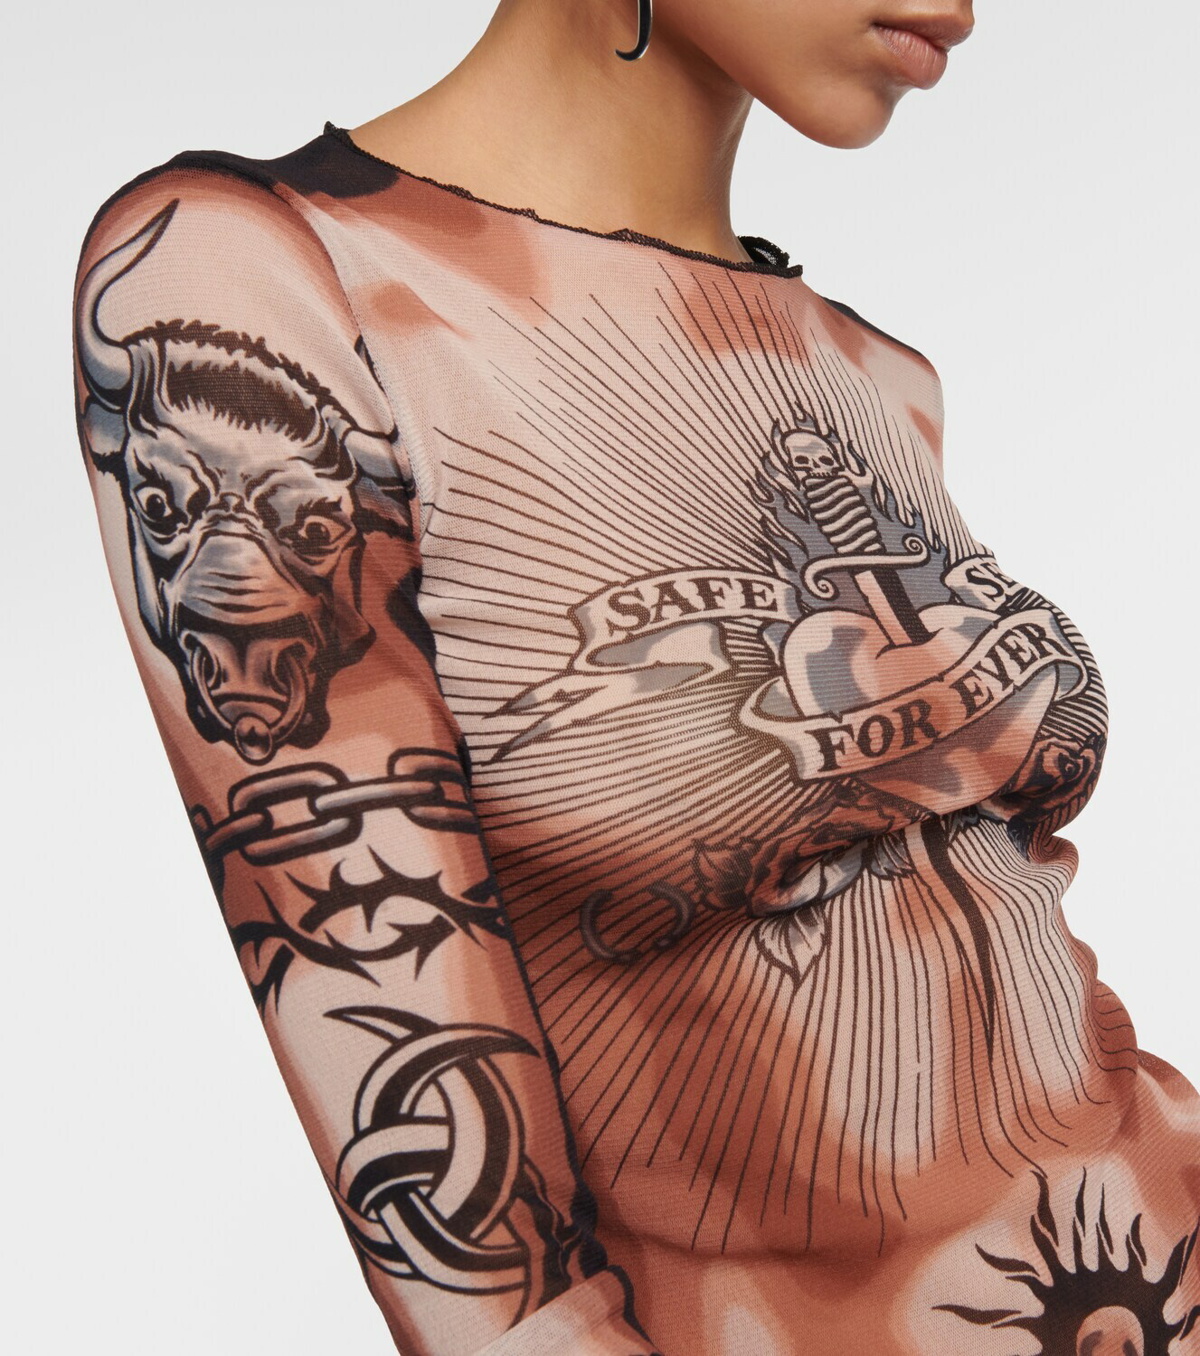 Gorillaz release 15-piece tattoo collection | DJ Mag